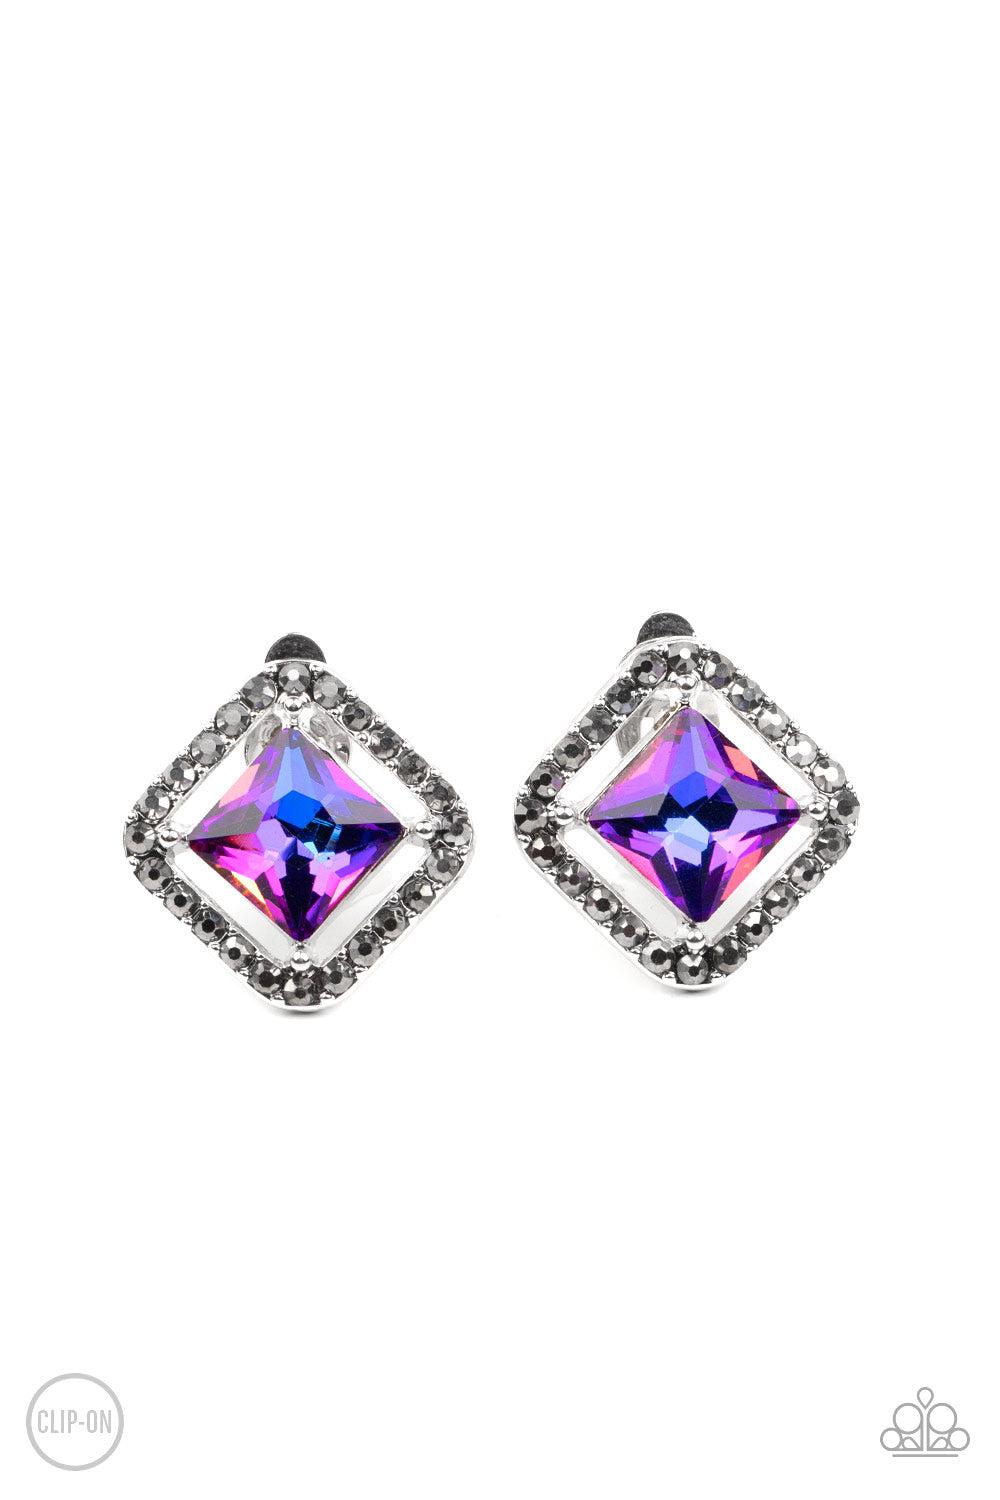 Cosmic Catwalk Purple Iridescent Rhinestone Clip-on Earrings - Paparazzi Accessories- lightbox - CarasShop.com - $5 Jewelry by Cara Jewels